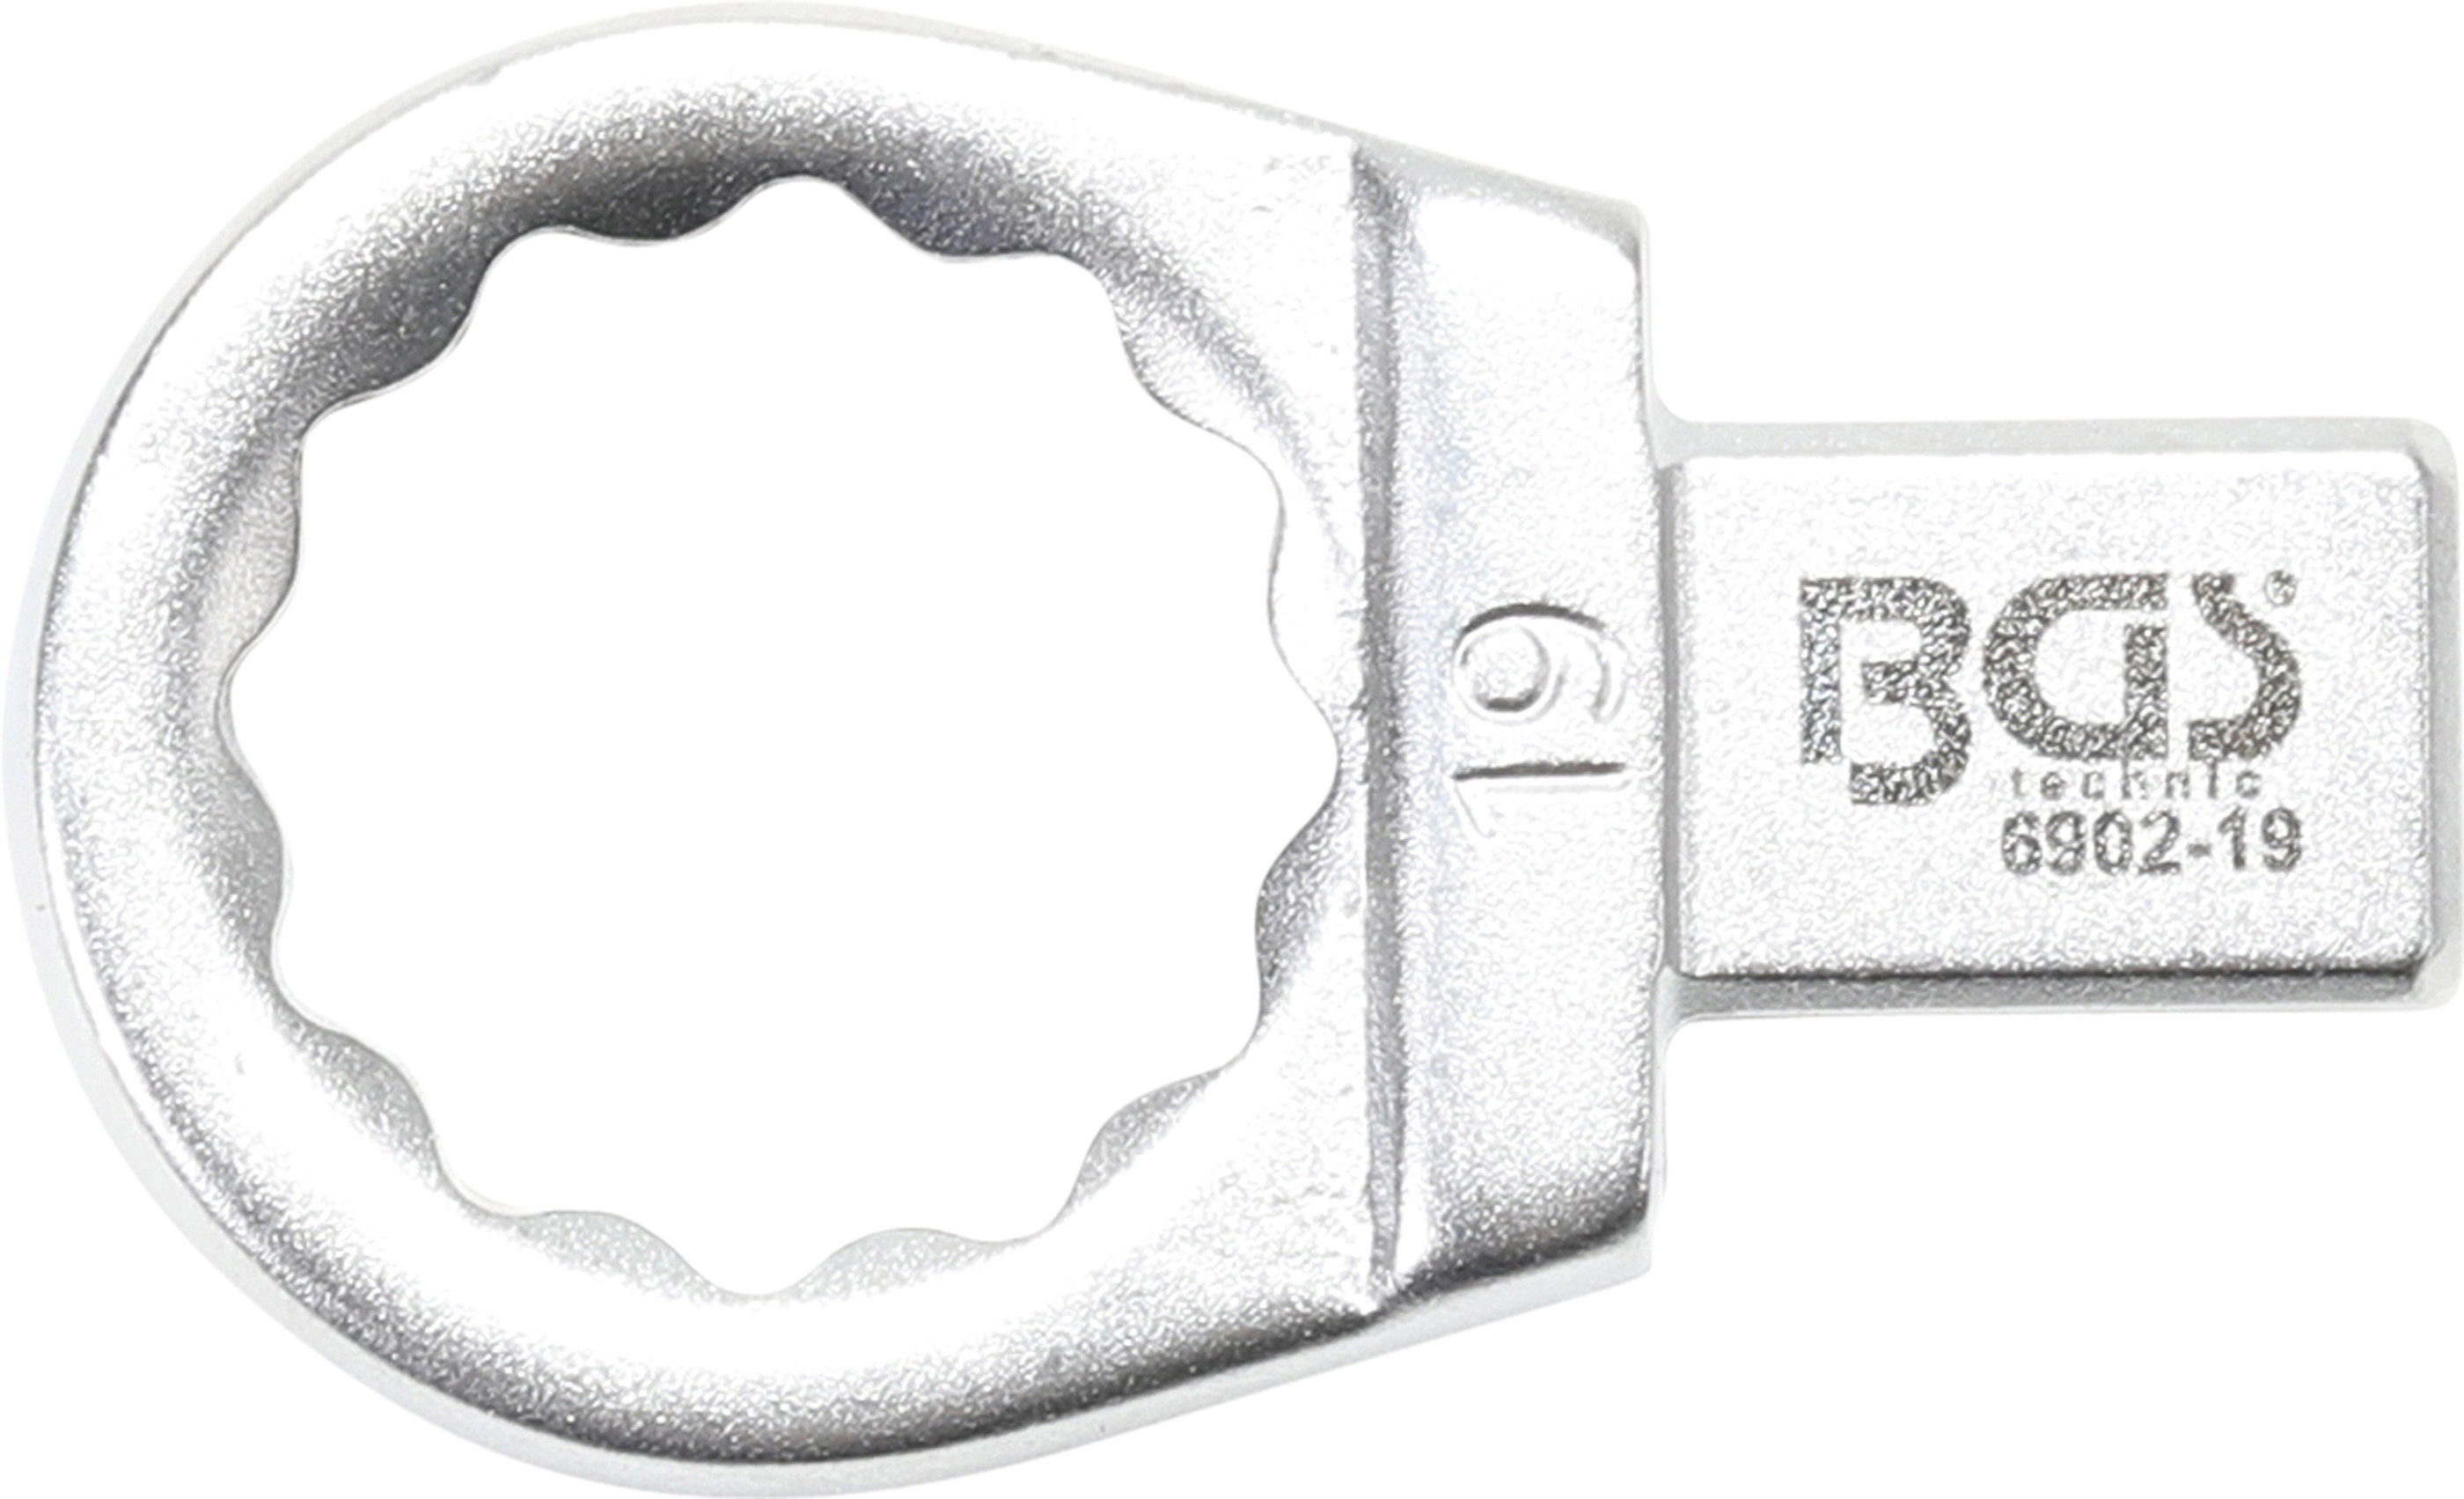 BGS 6902-19 Cheie inelară detașabilă 19 mm, prindere 9 x 12 mm